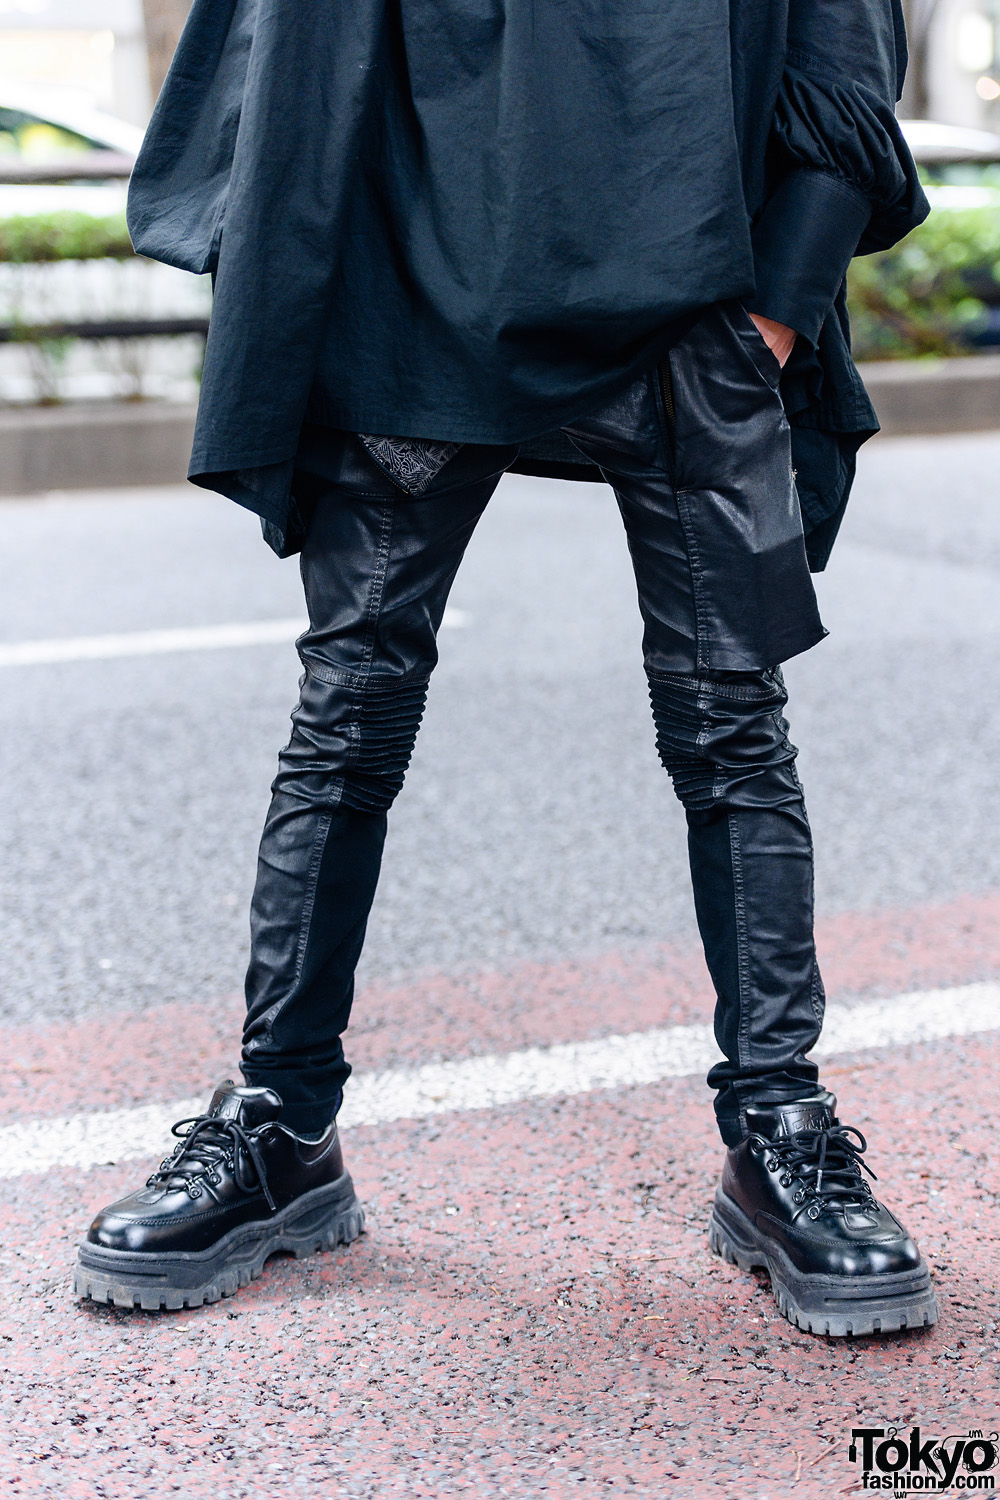 Japanese Stylist's All Black Street Style w/ Face Mask, Sacai x